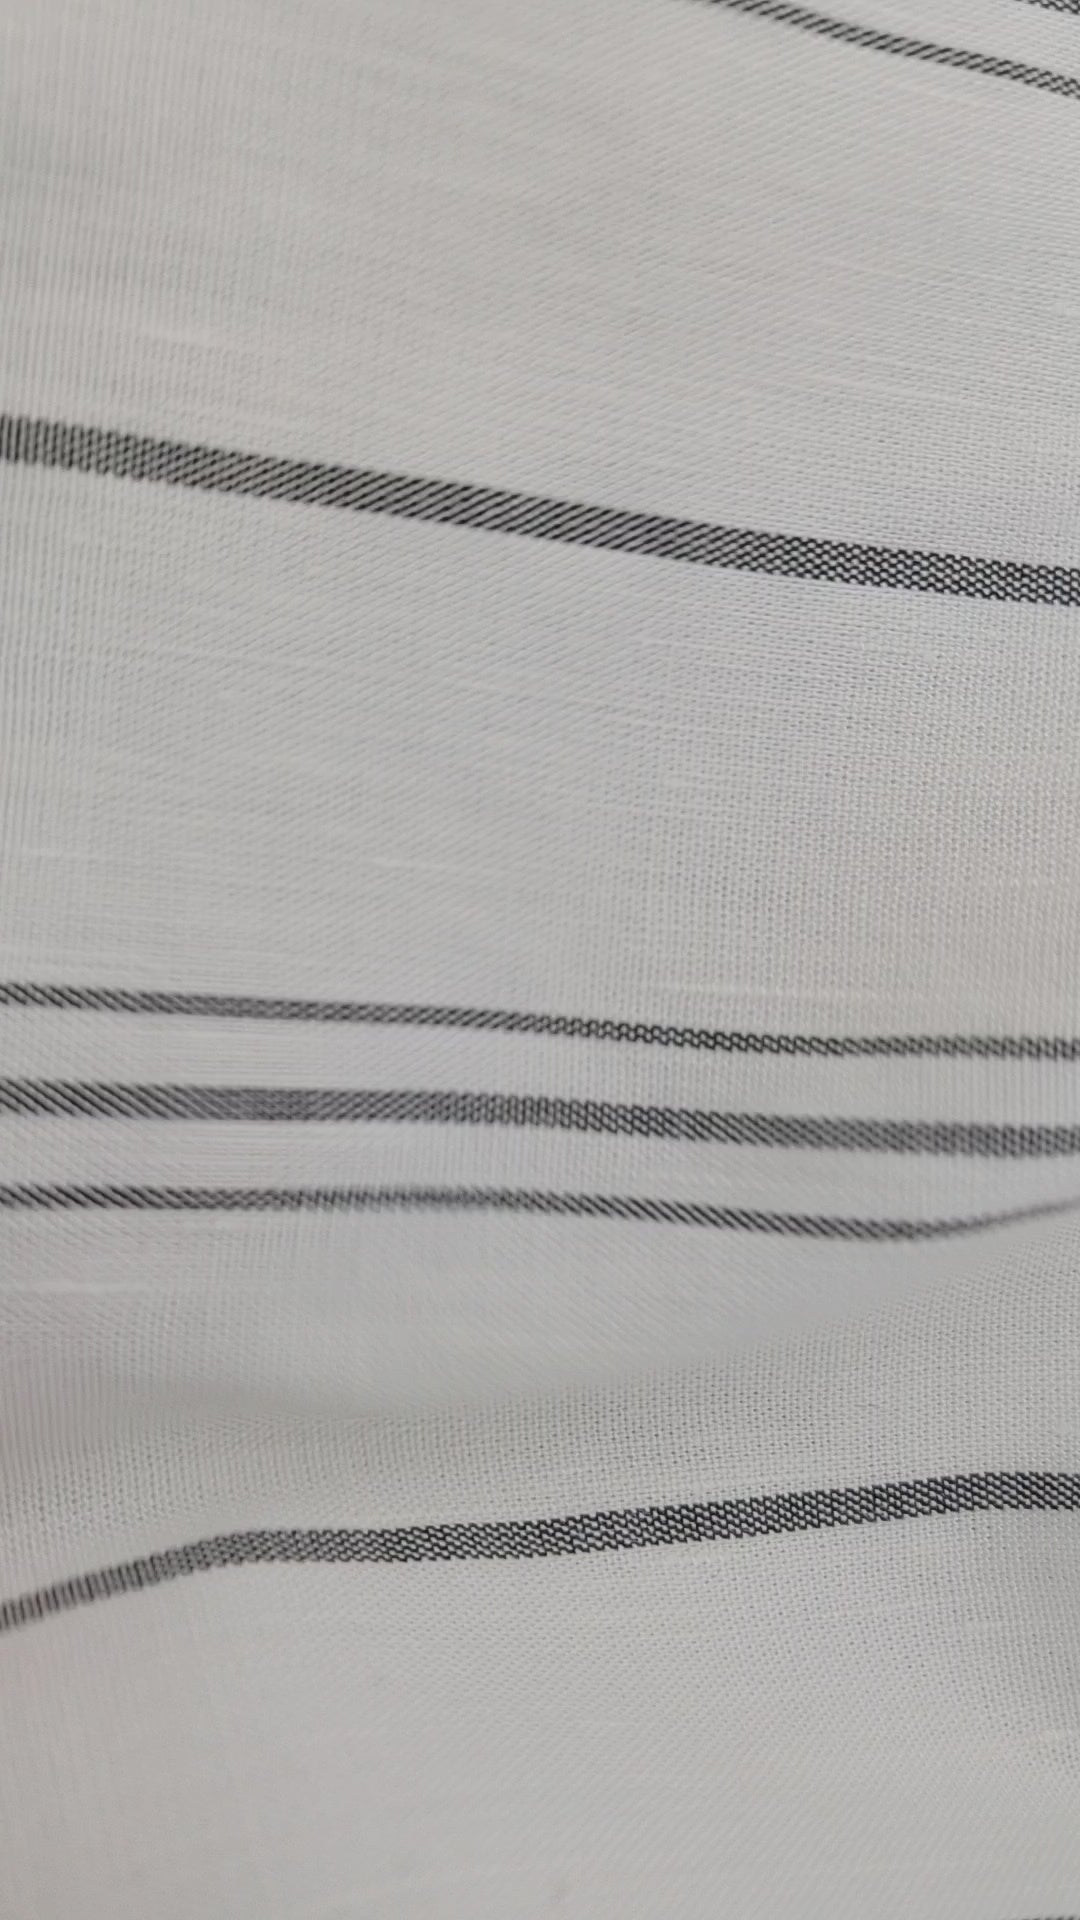 Classic Monochrome: White & Black Stripes Linen Rayon Stretch Fabric 6687